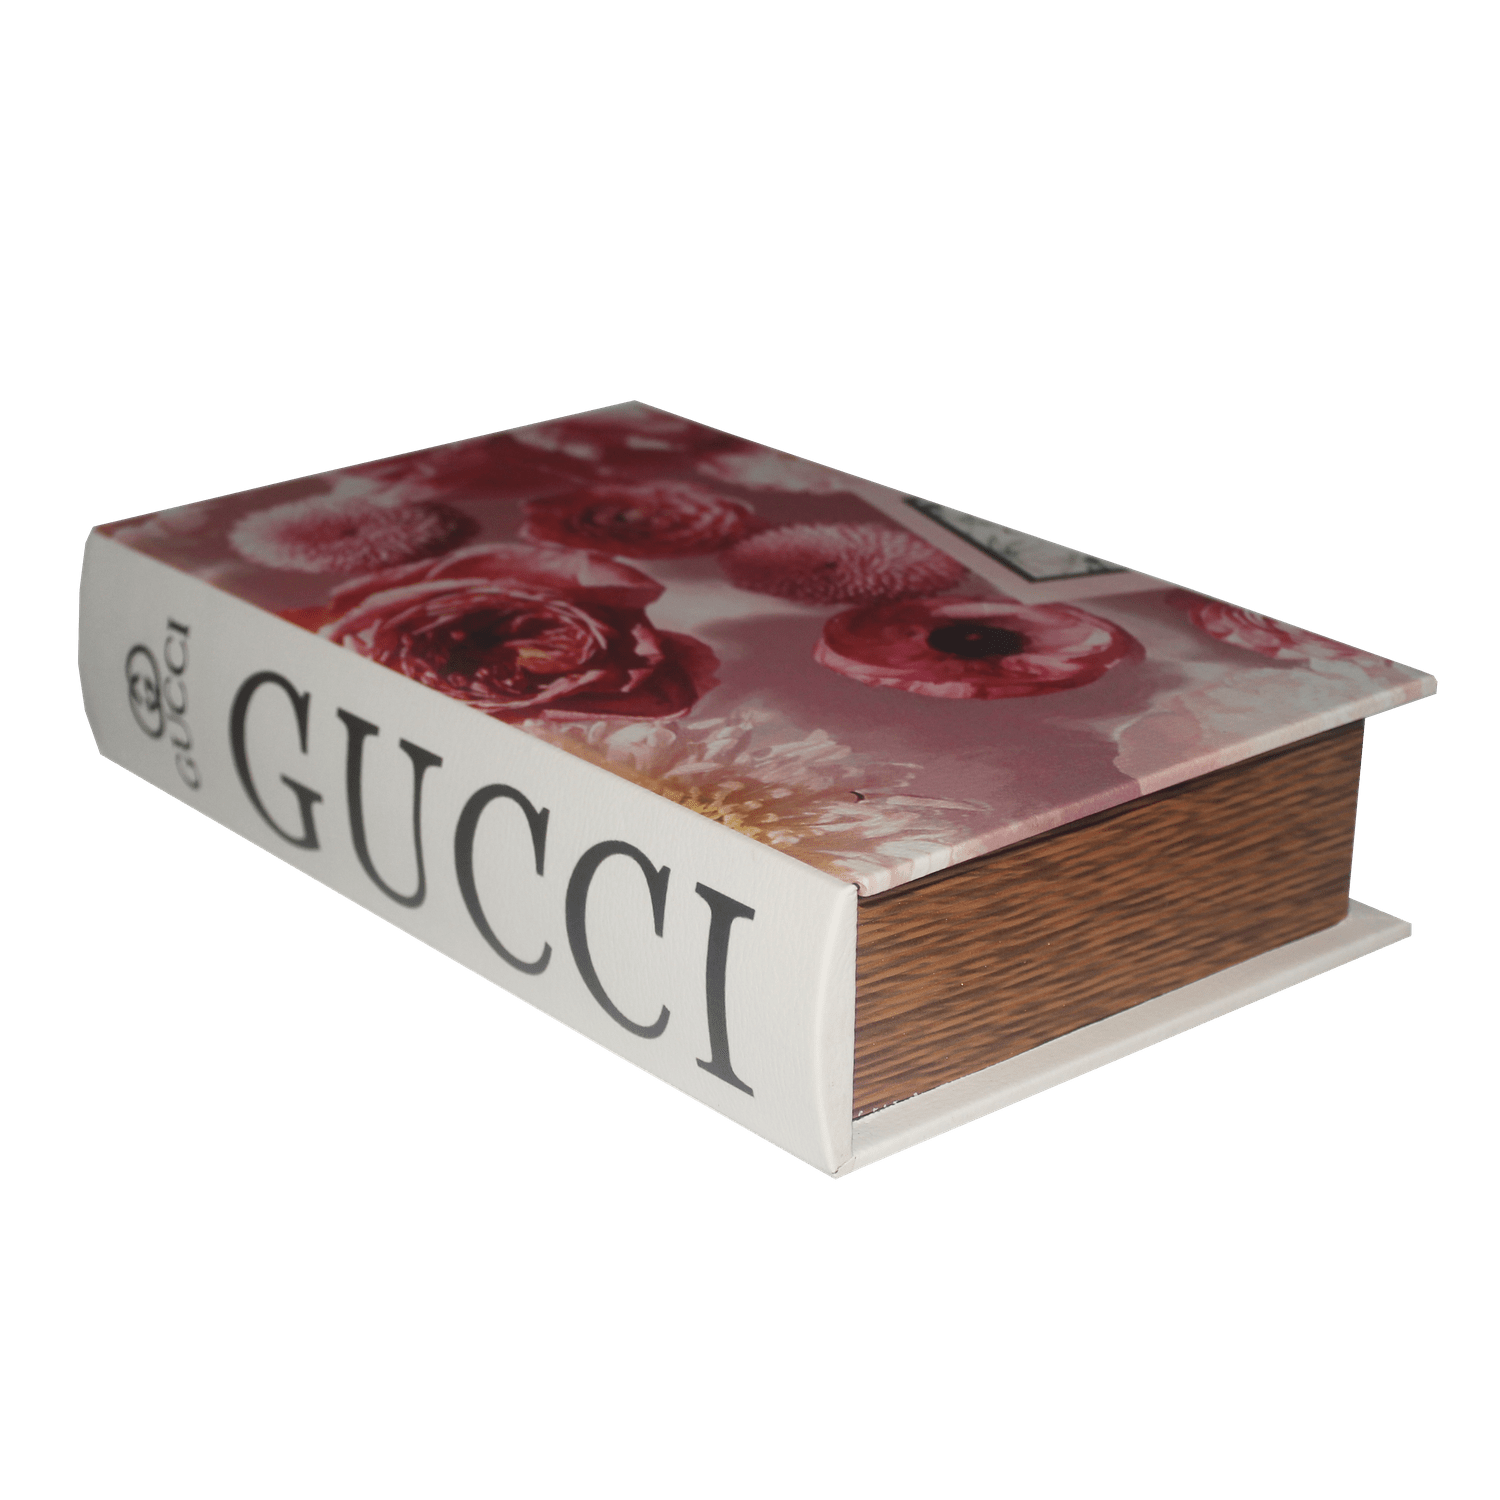 Caixa Book Gucci M Casa Fraga - 2